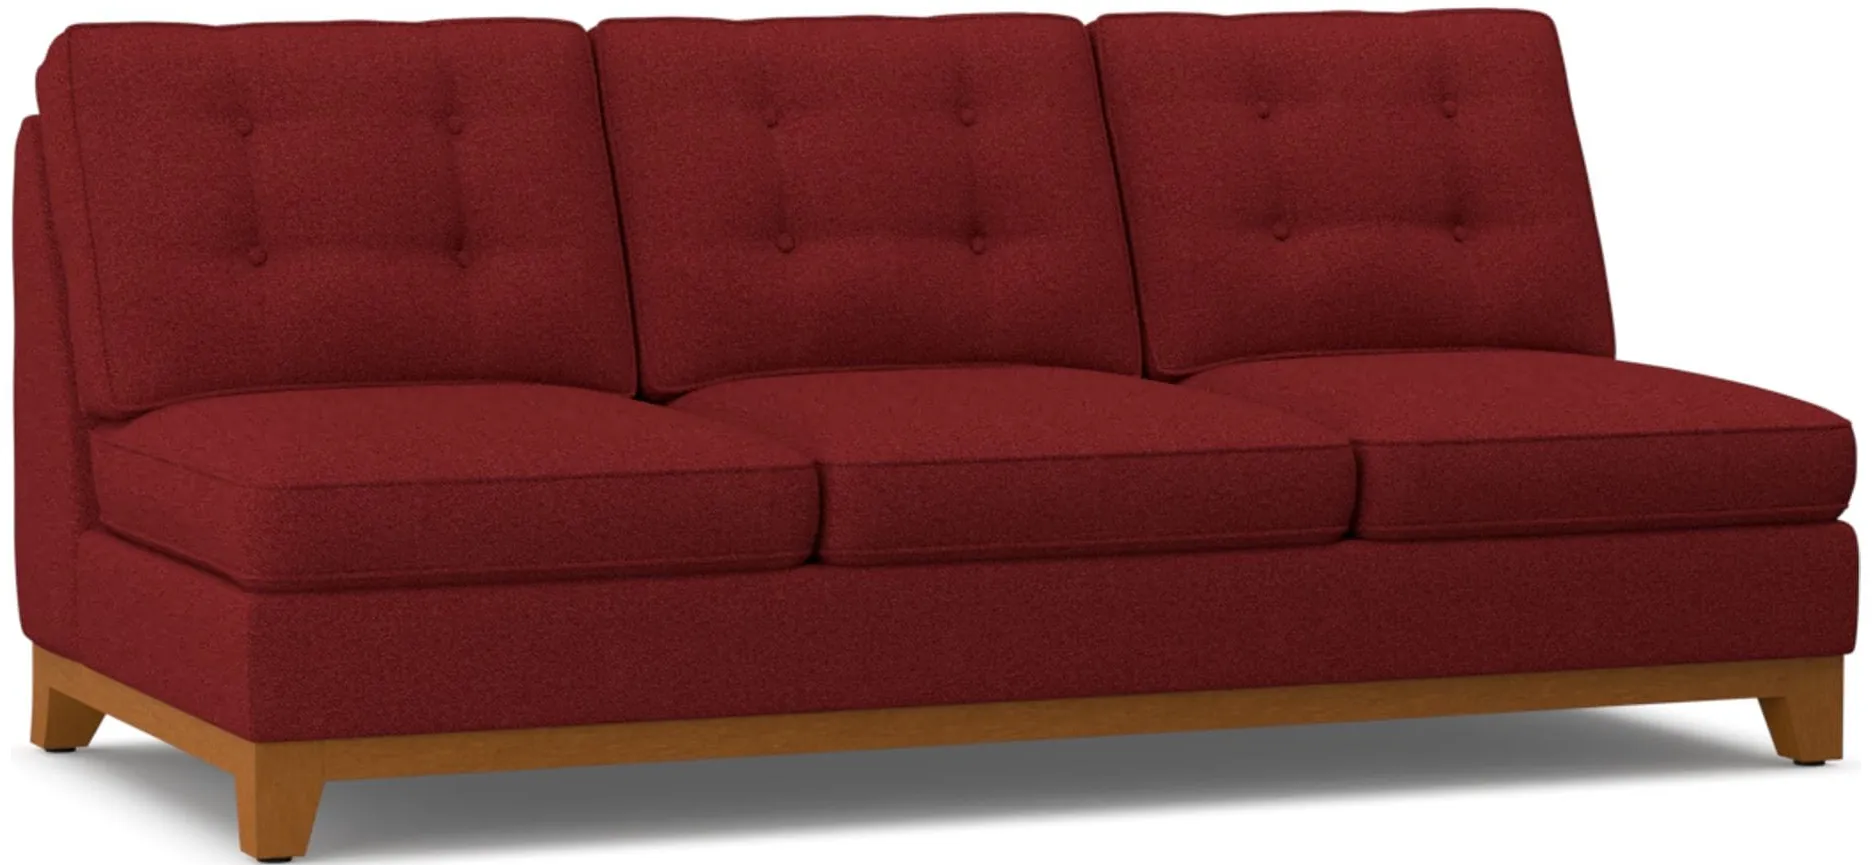 Brentwood Armless Sofa